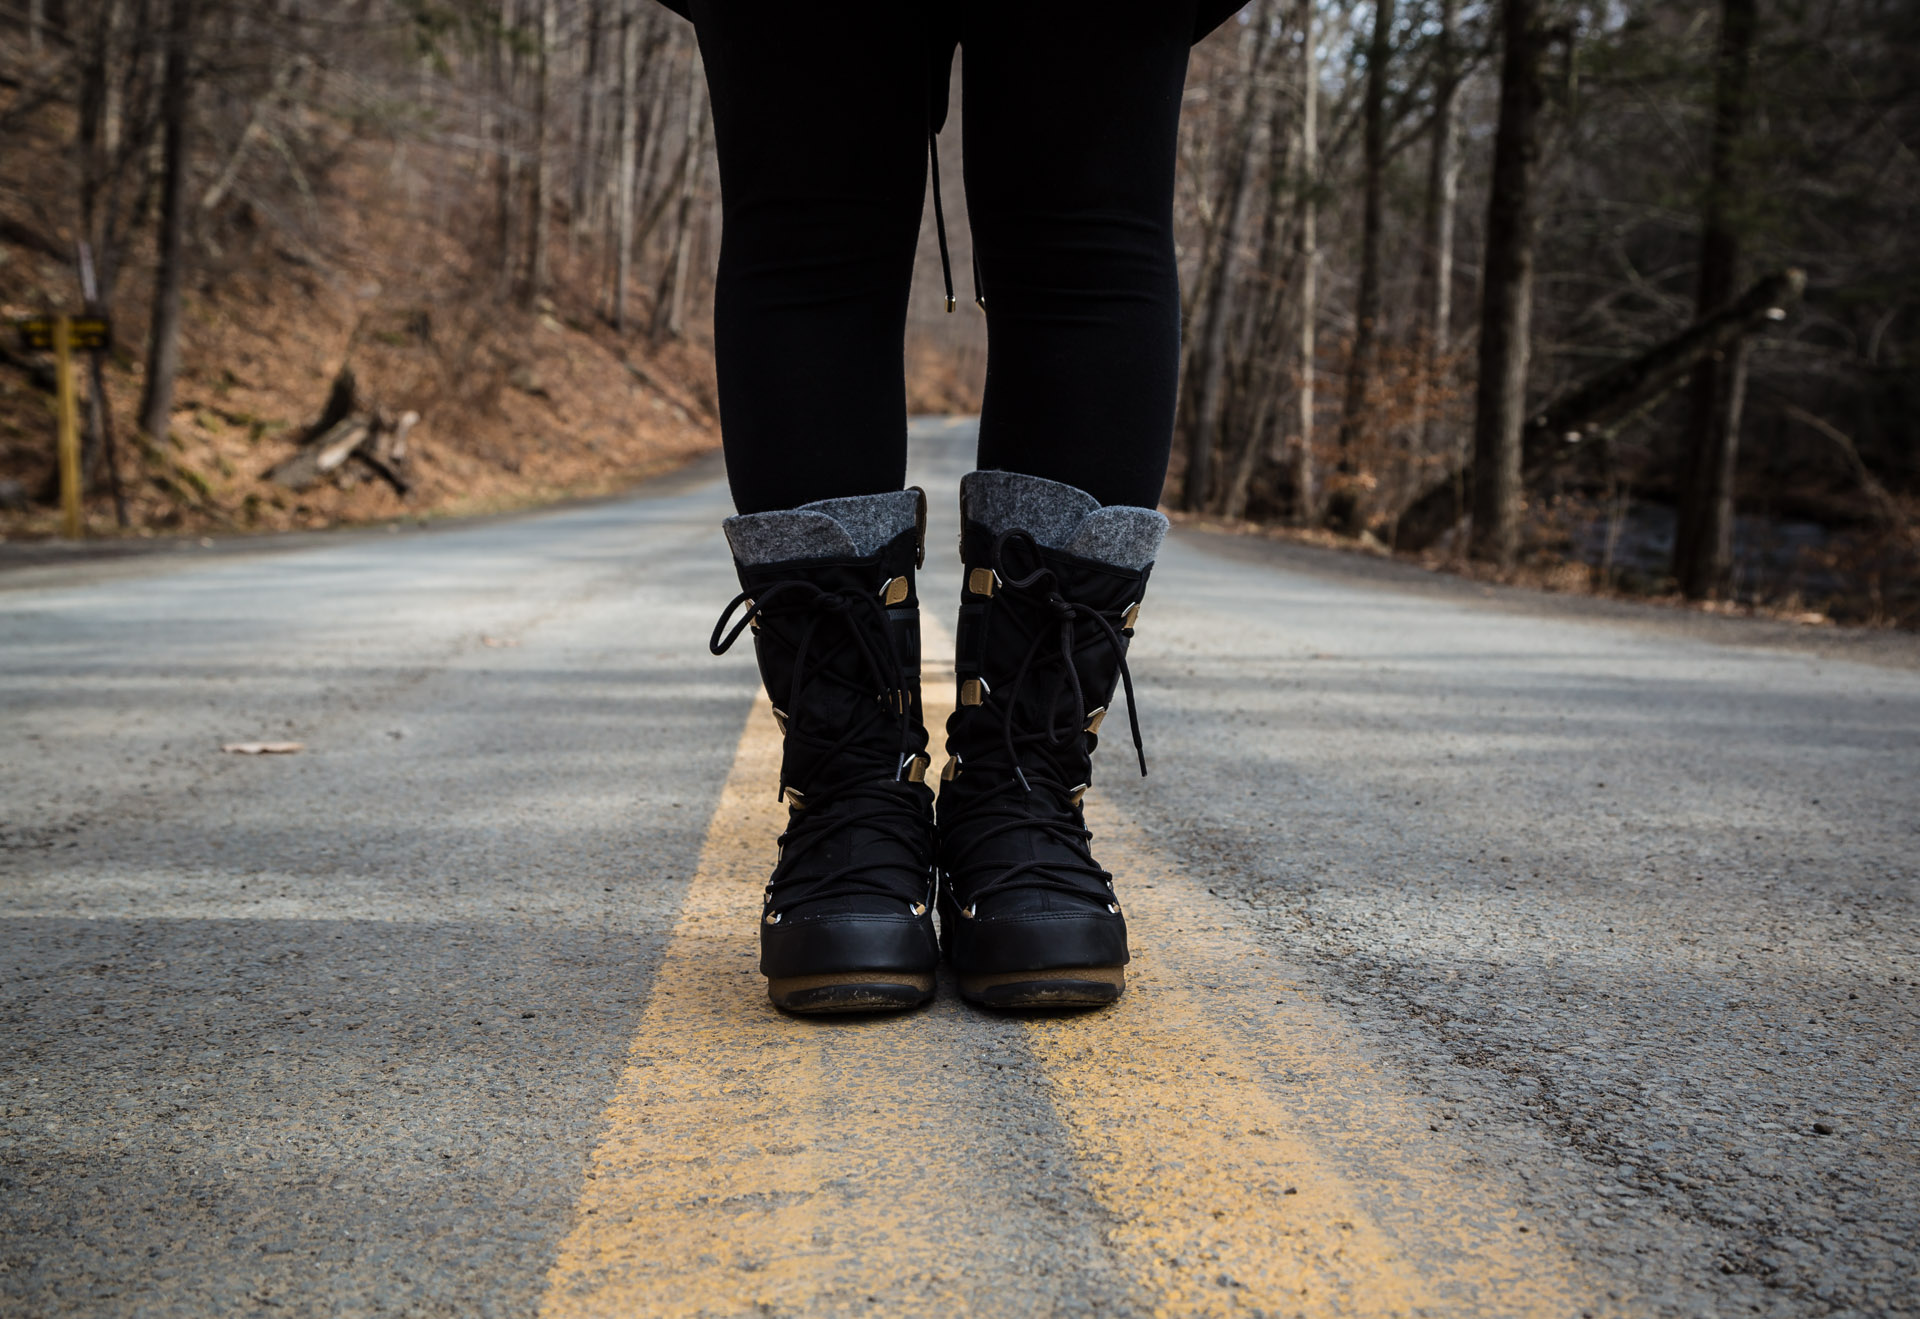 Catskills Part 1 (road boots)